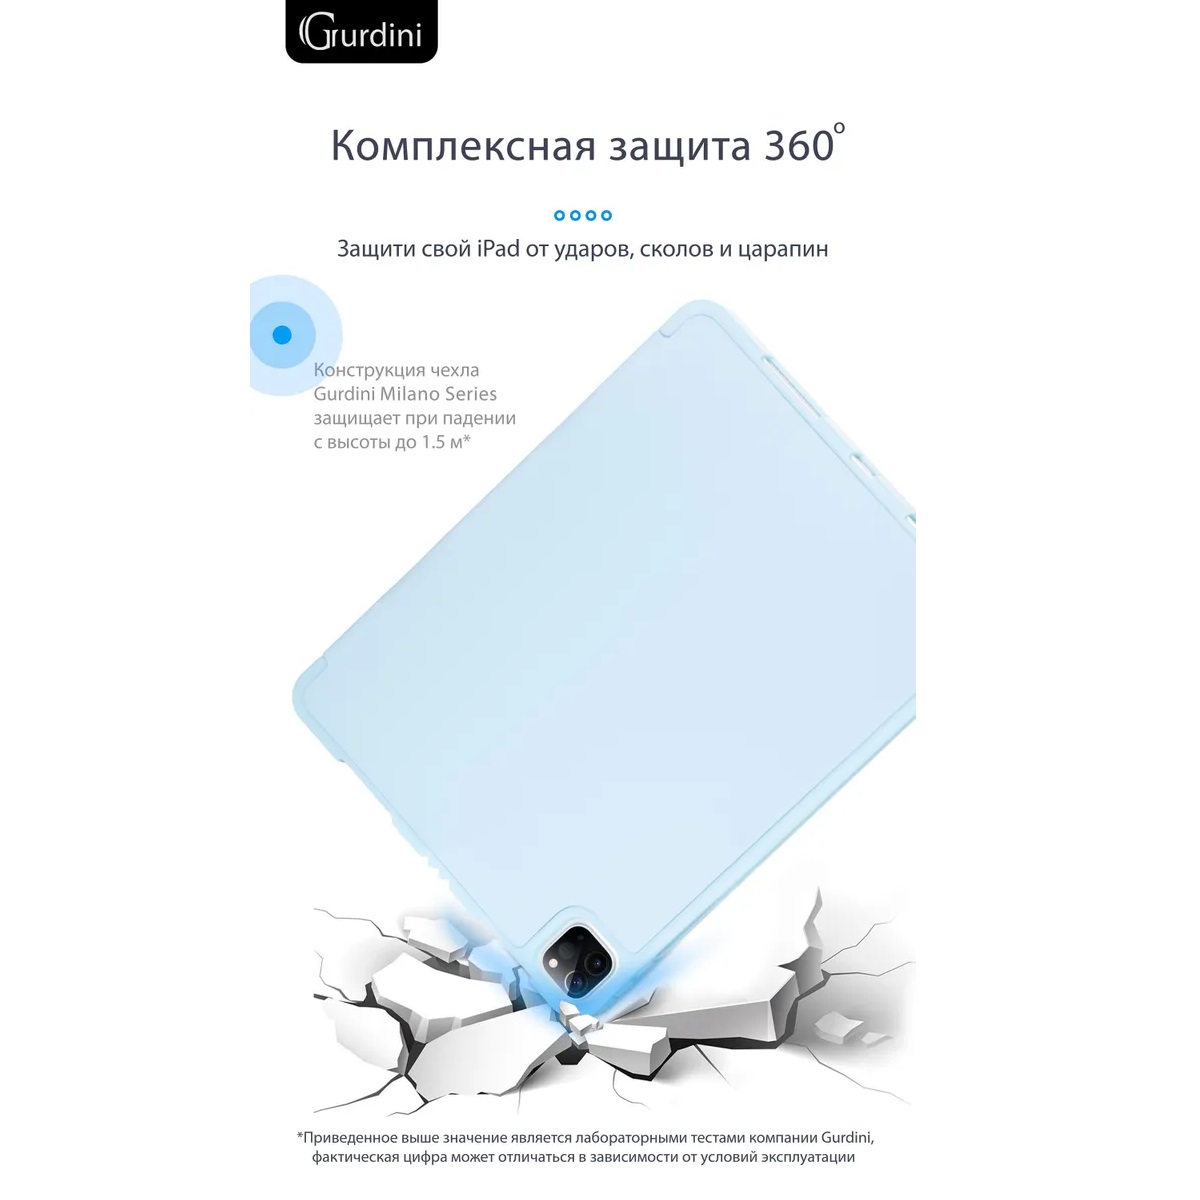 Чехол-книжка Gurdini Milano Series (pen slot) для iPad Pro 11 Cloud Blue